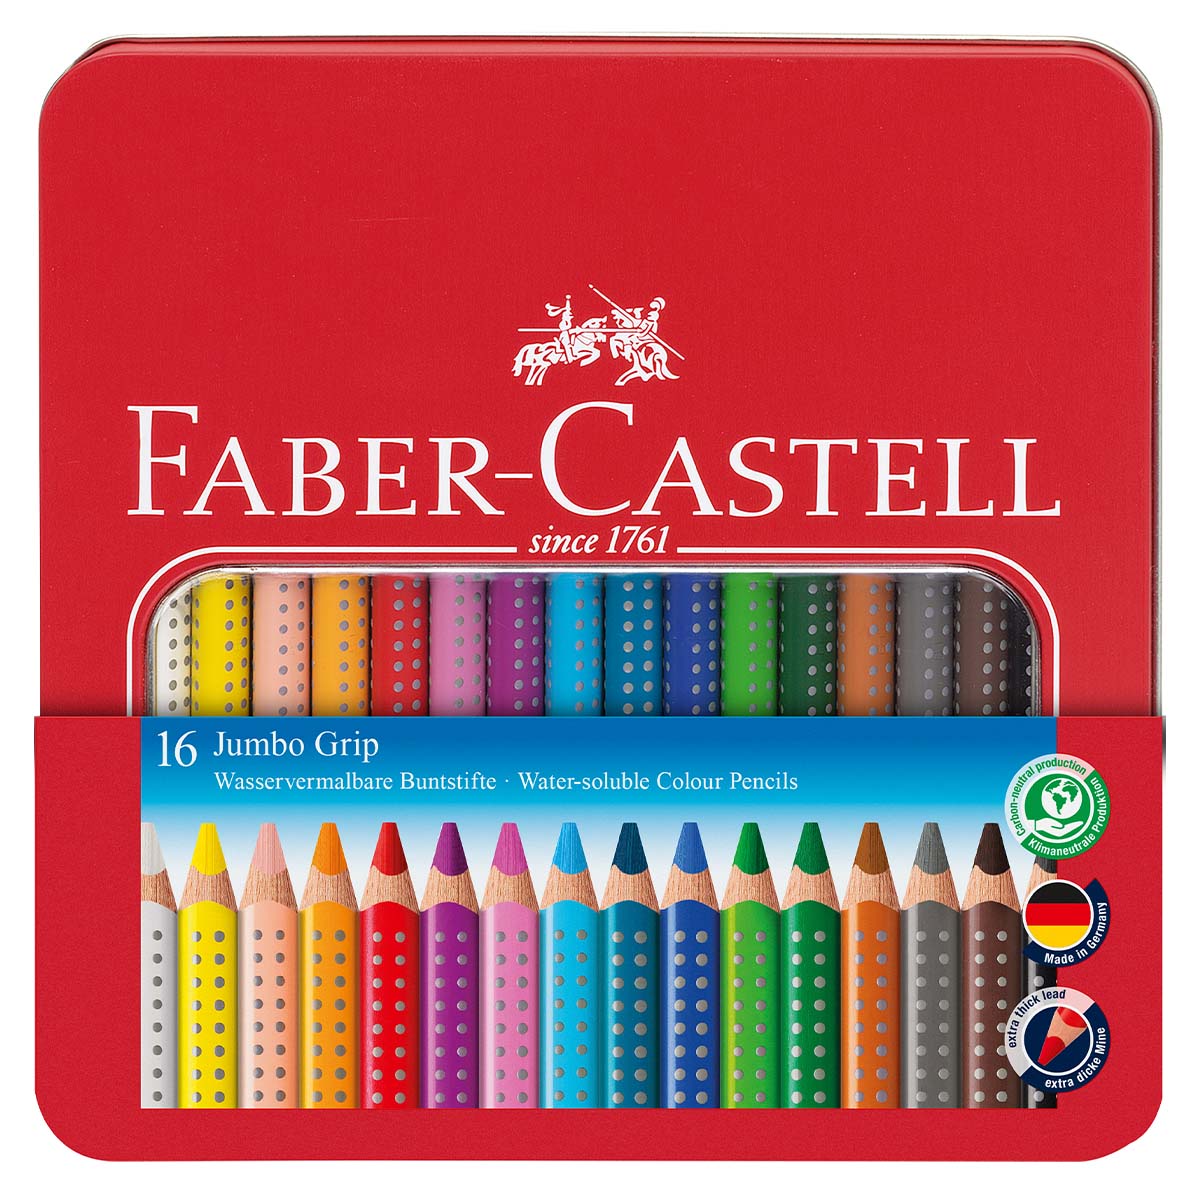 Faber-Castell Watercolour Pencil ART GRIP AQUARELLE (Tin of 36